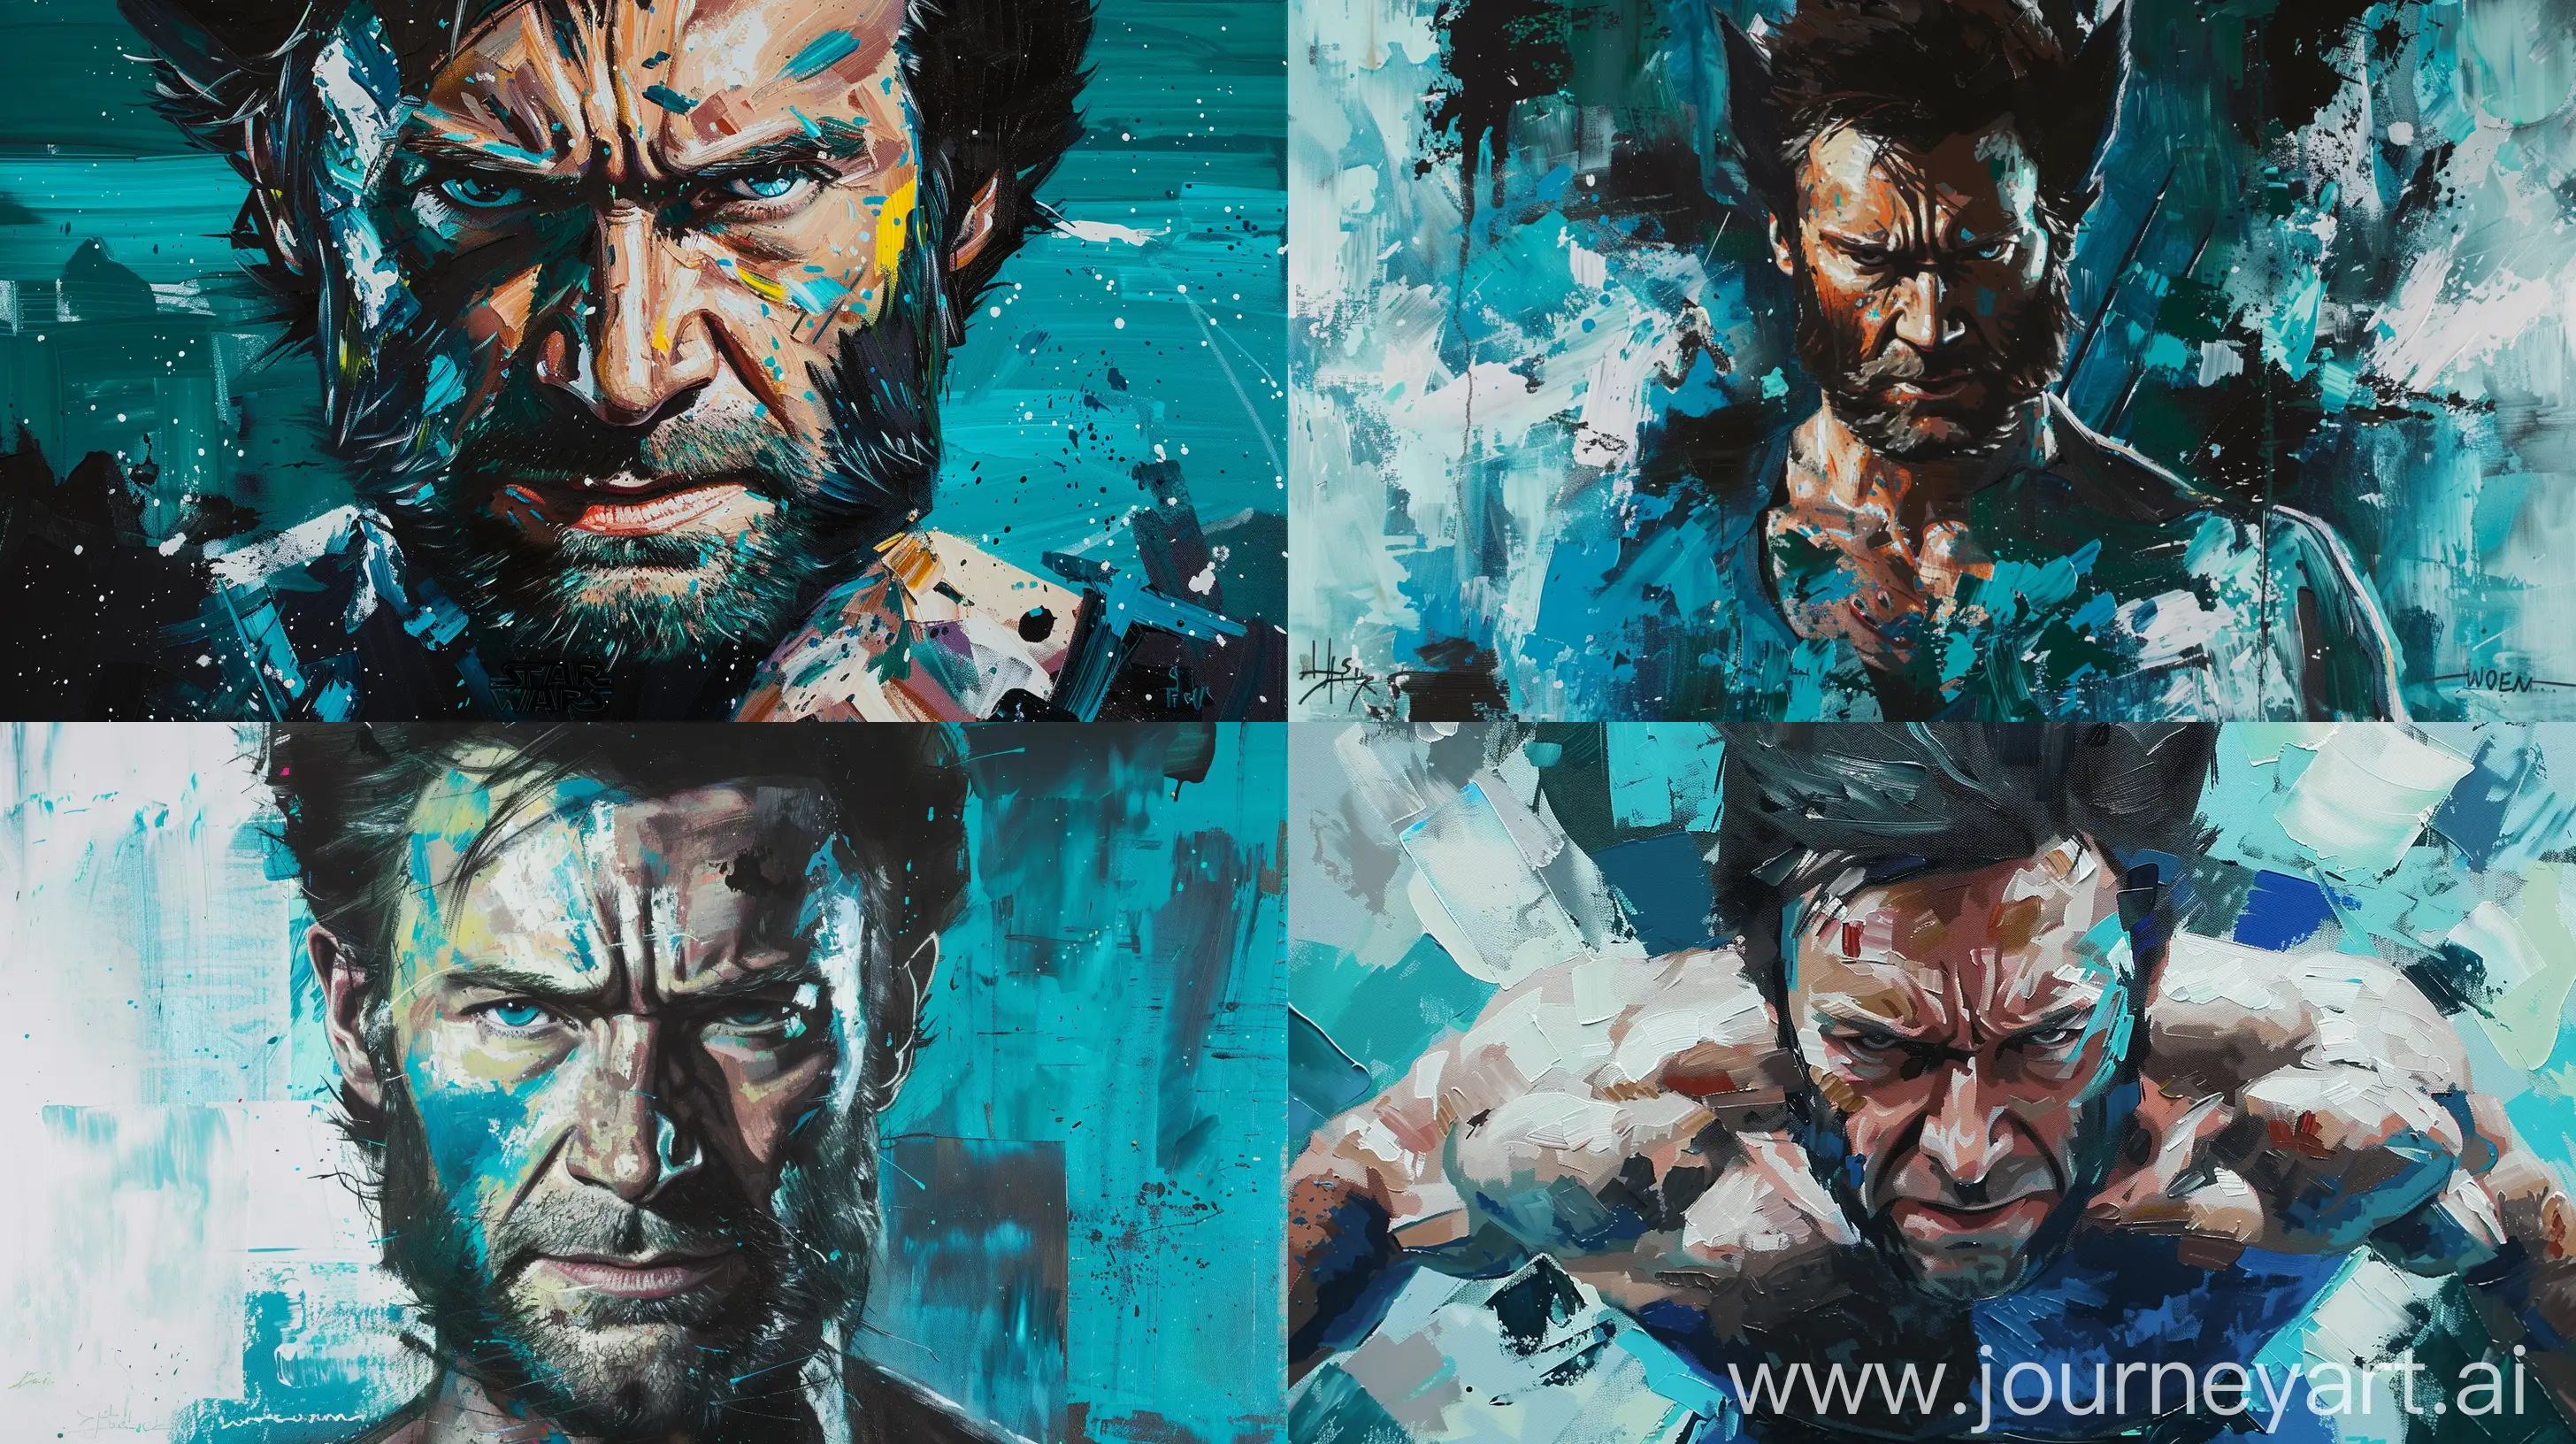 Hugh-Jackman-as-Wolverine-Star-Wars-Inspired-Oil-Painting